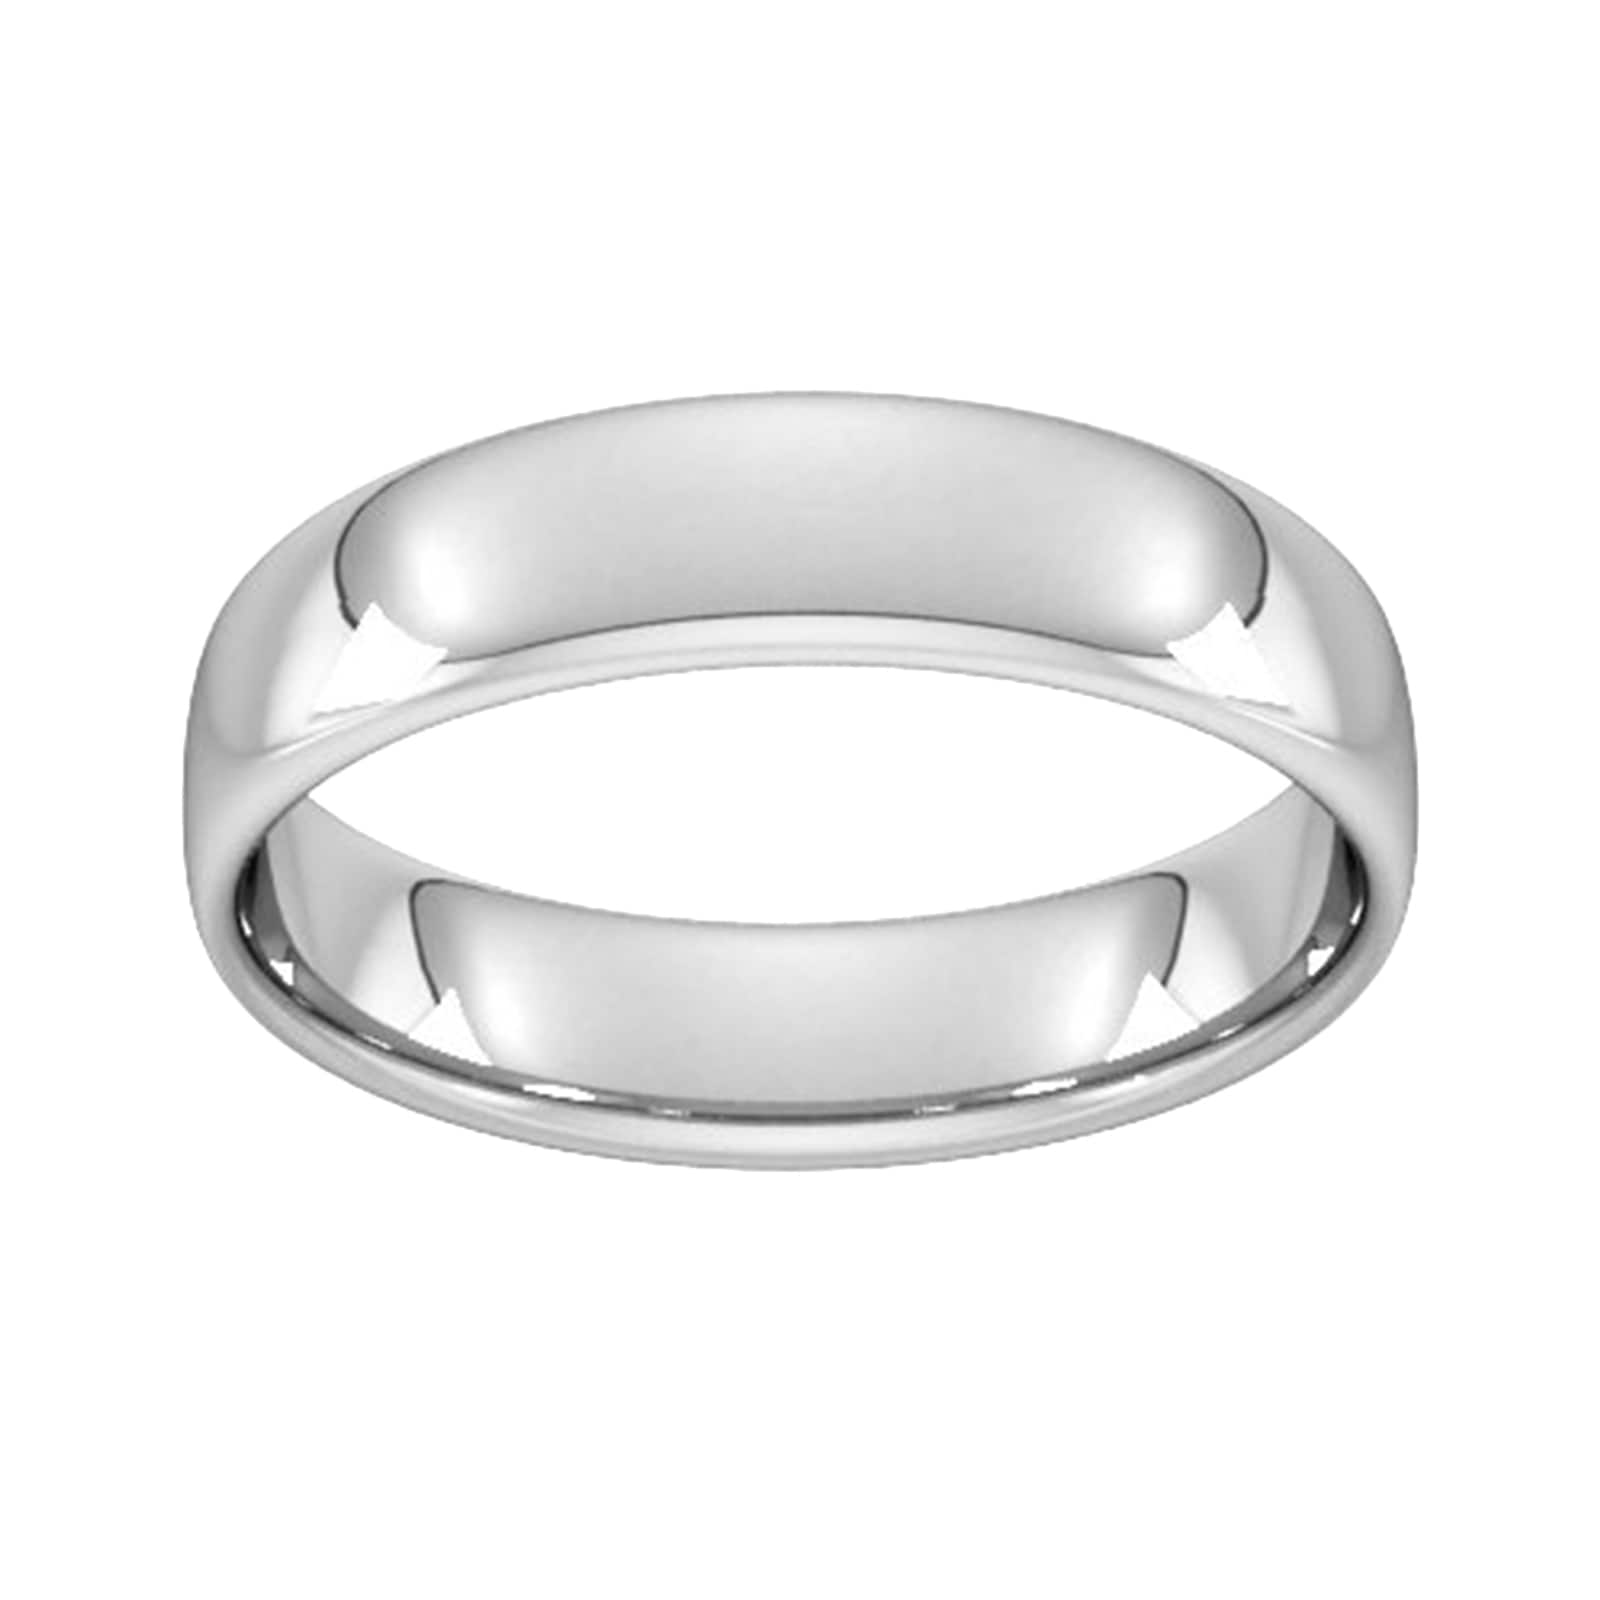 5mm Slight Court Standard Wedding Ring In Sterling Silver - Ring Size J